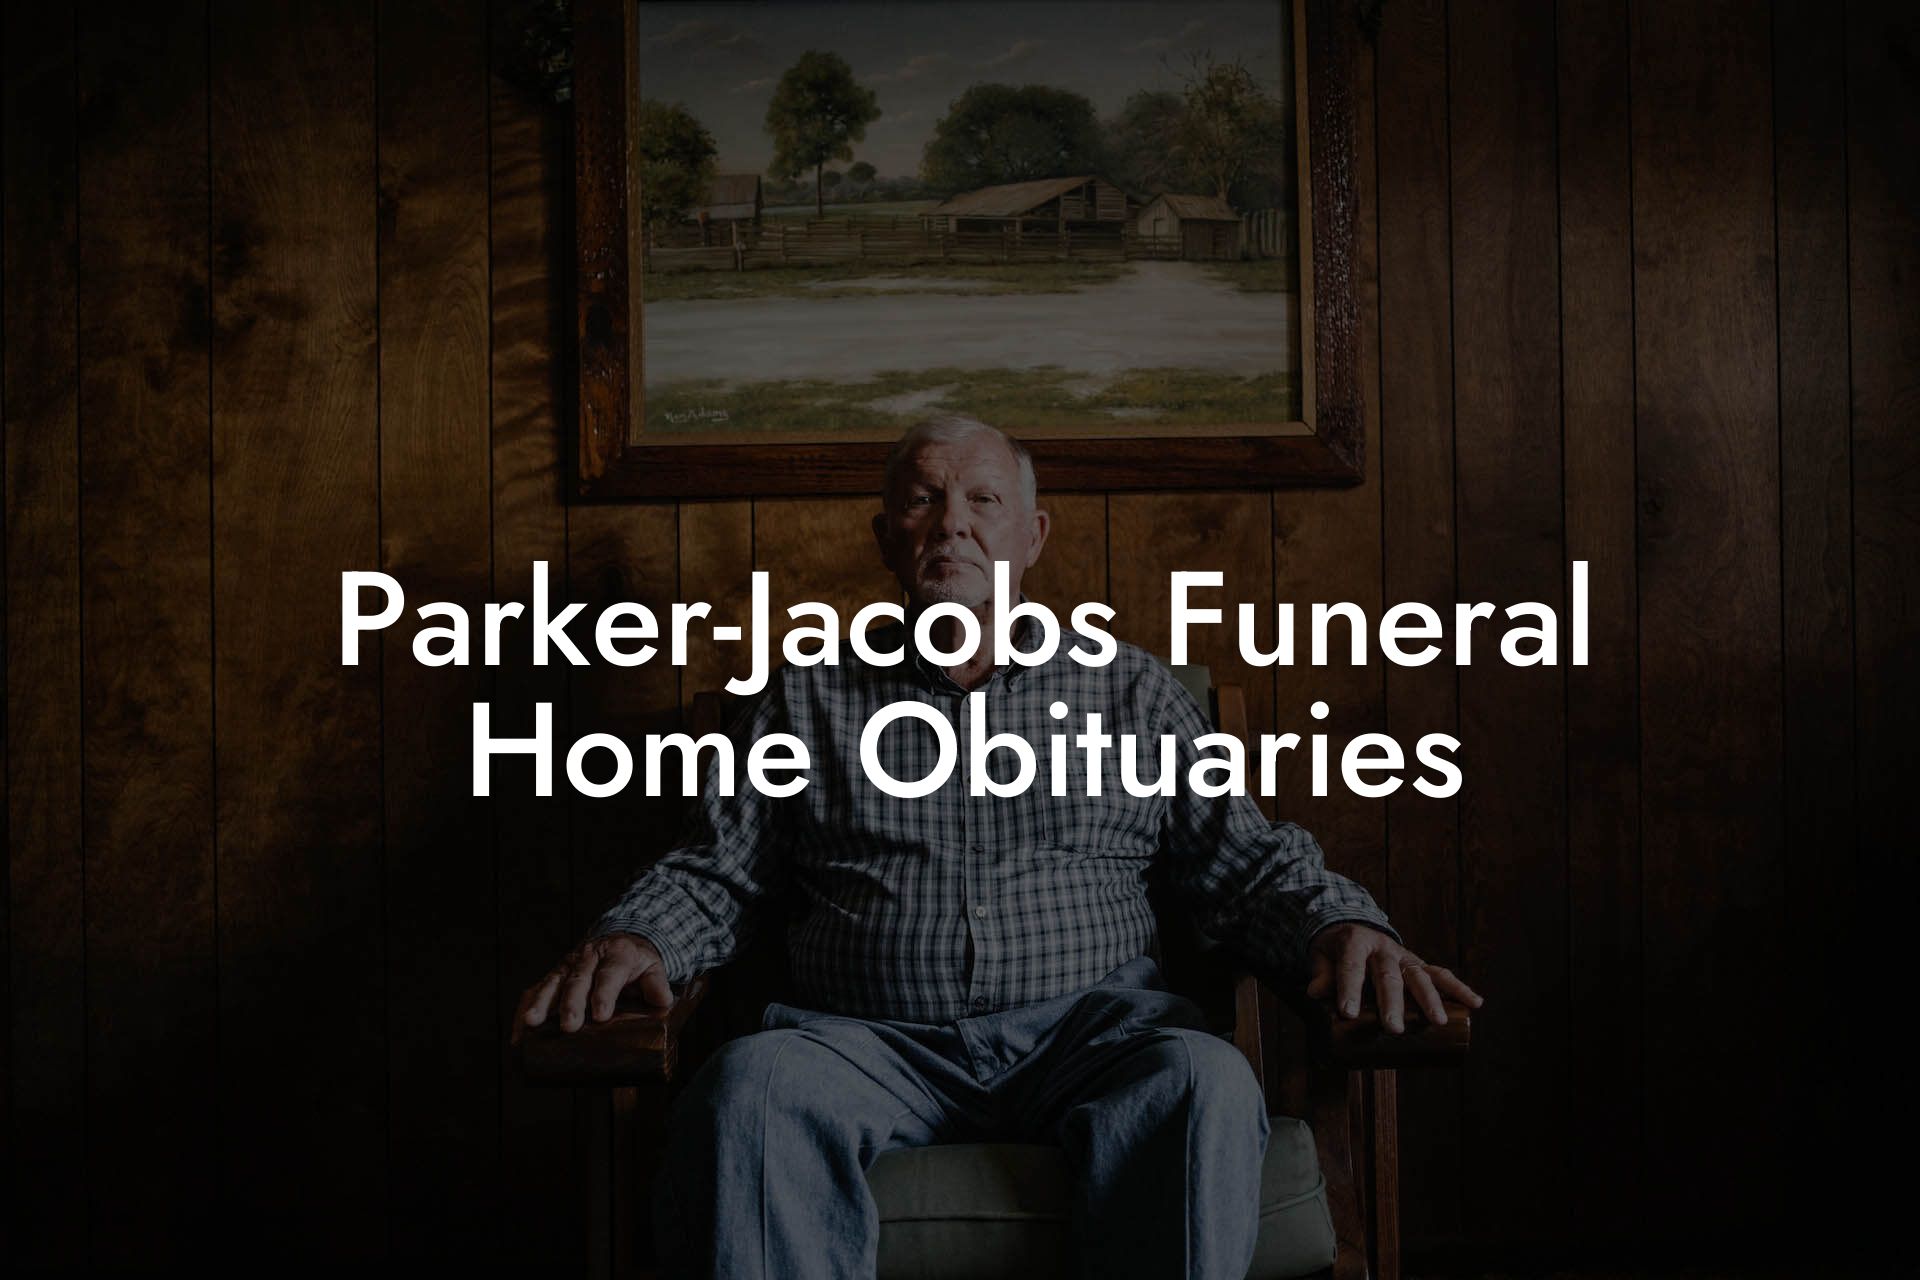 Parker-Jacobs Funeral Home Obituaries